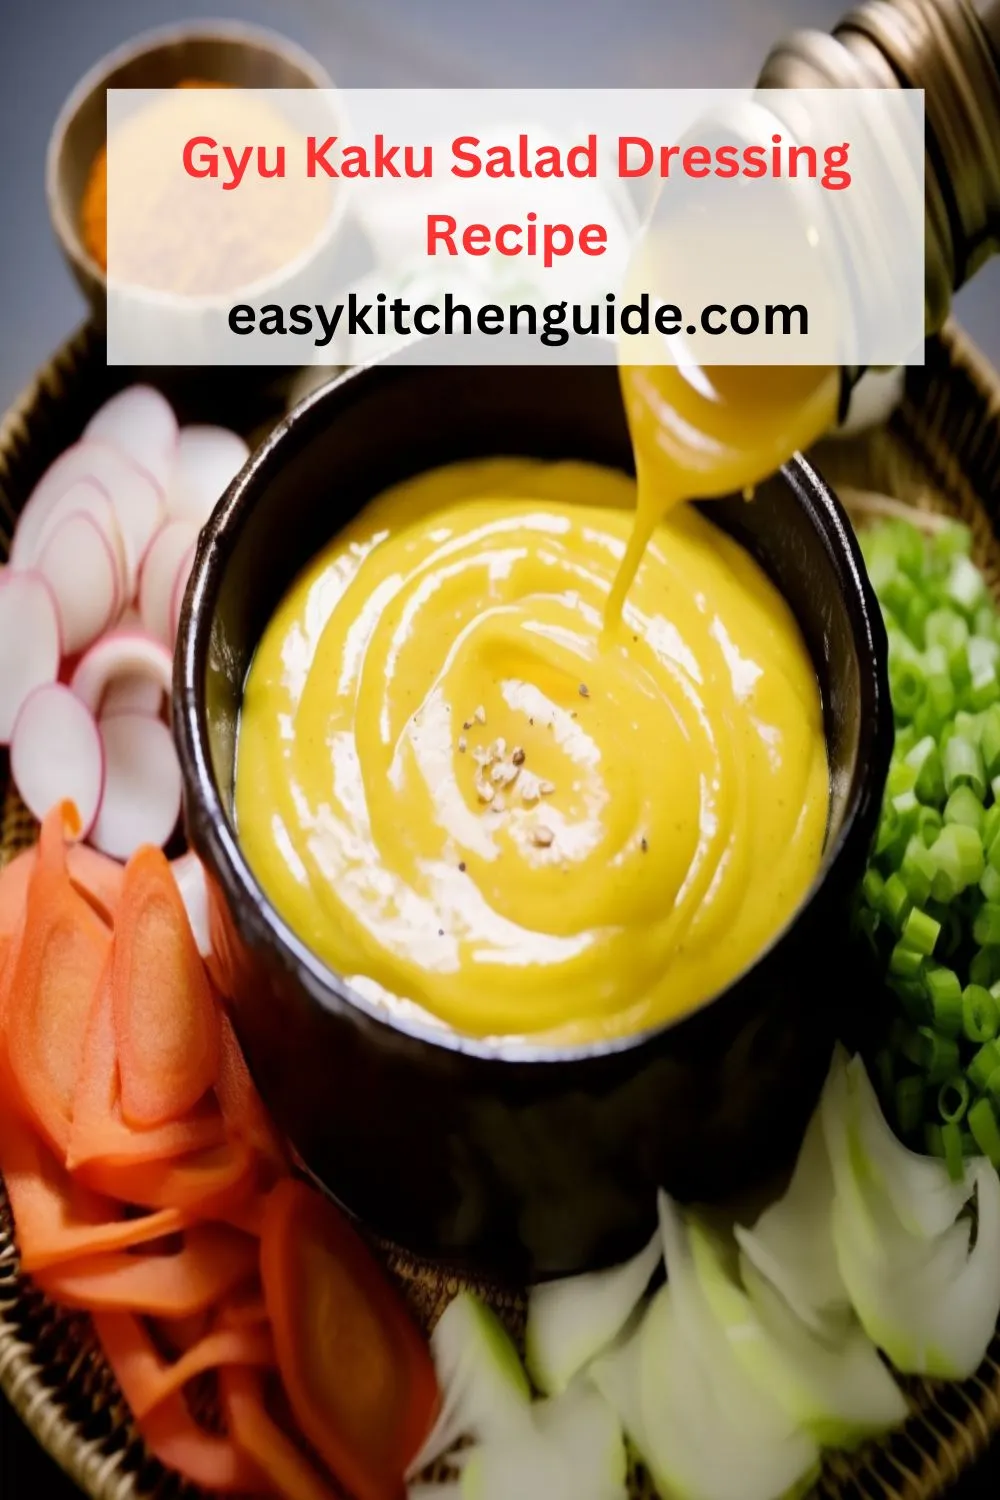 Gyu Kaku Salad Dressing Recipe